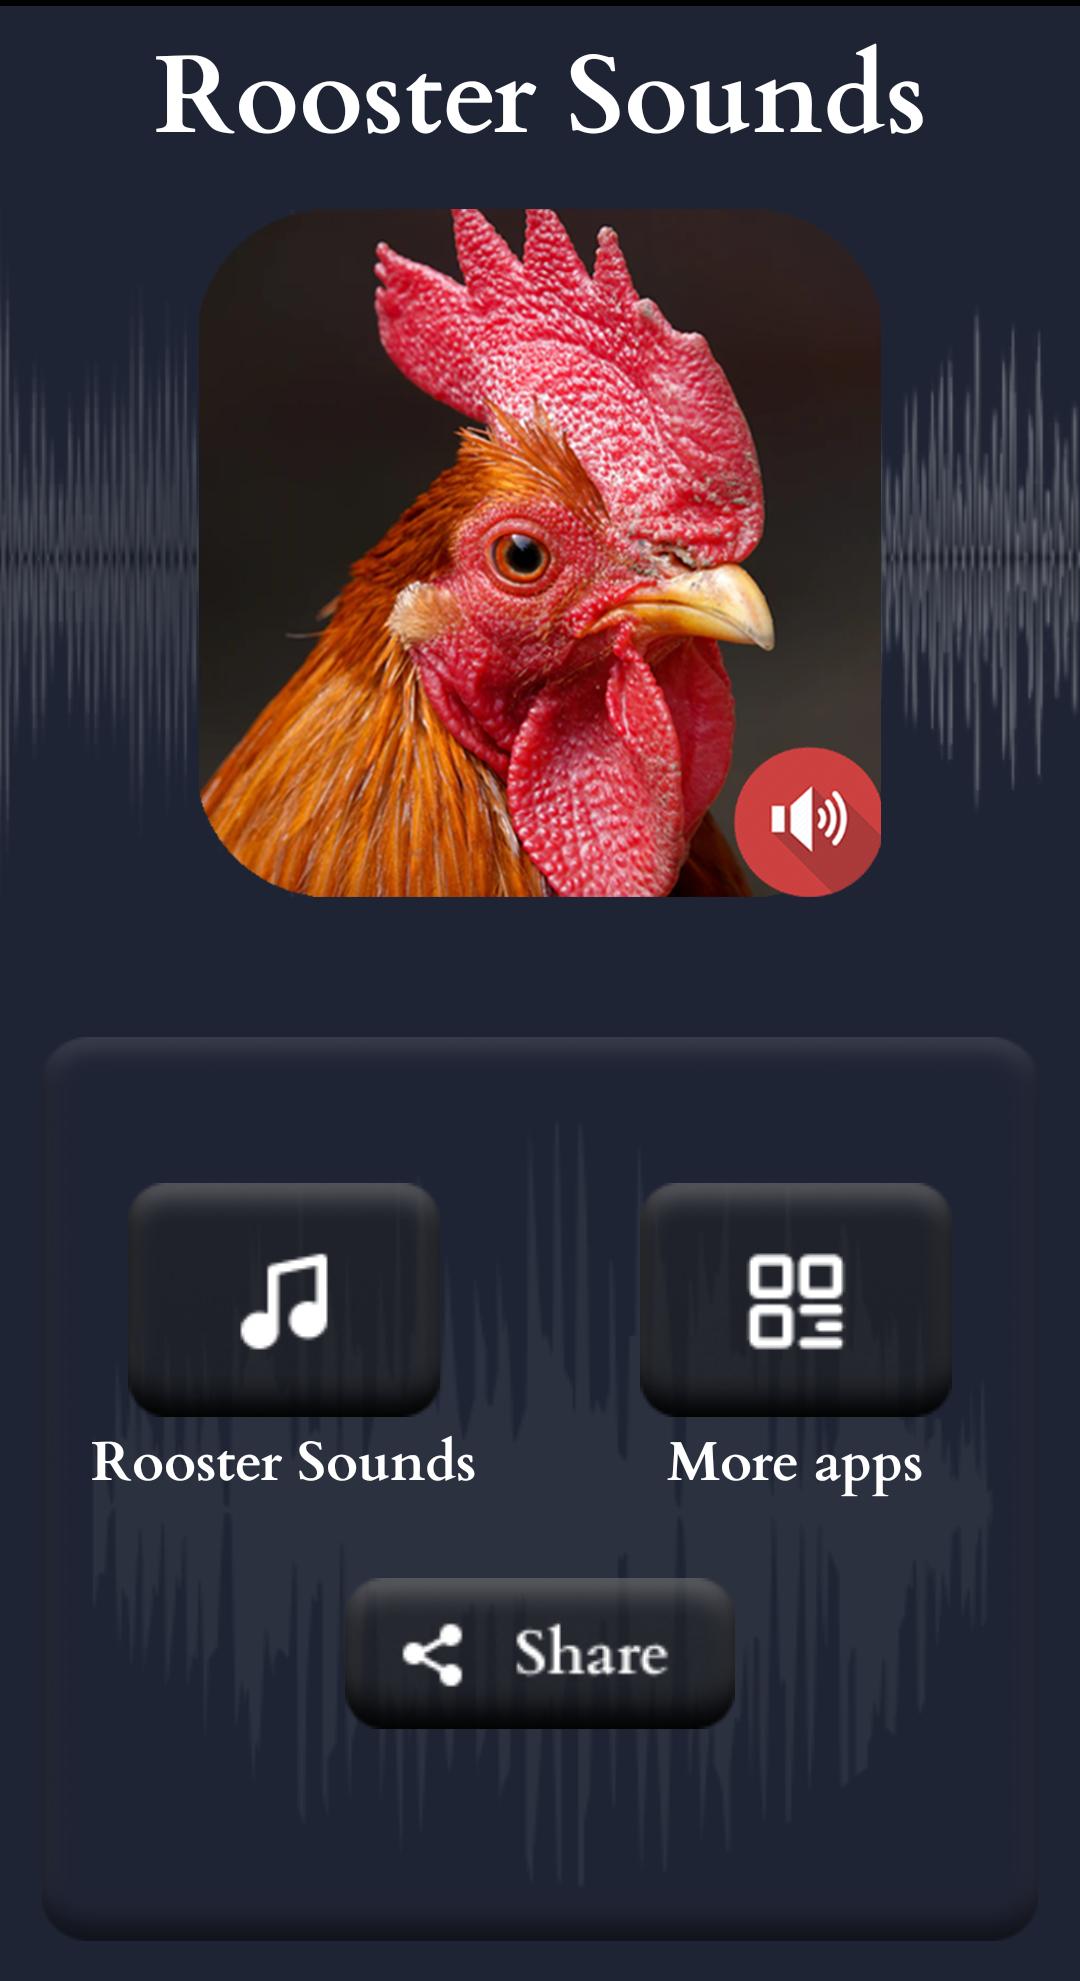 Аудио петуха. Звук петуха. Rooster Sounds. Звук петуха слушать. Звуки игры петух.